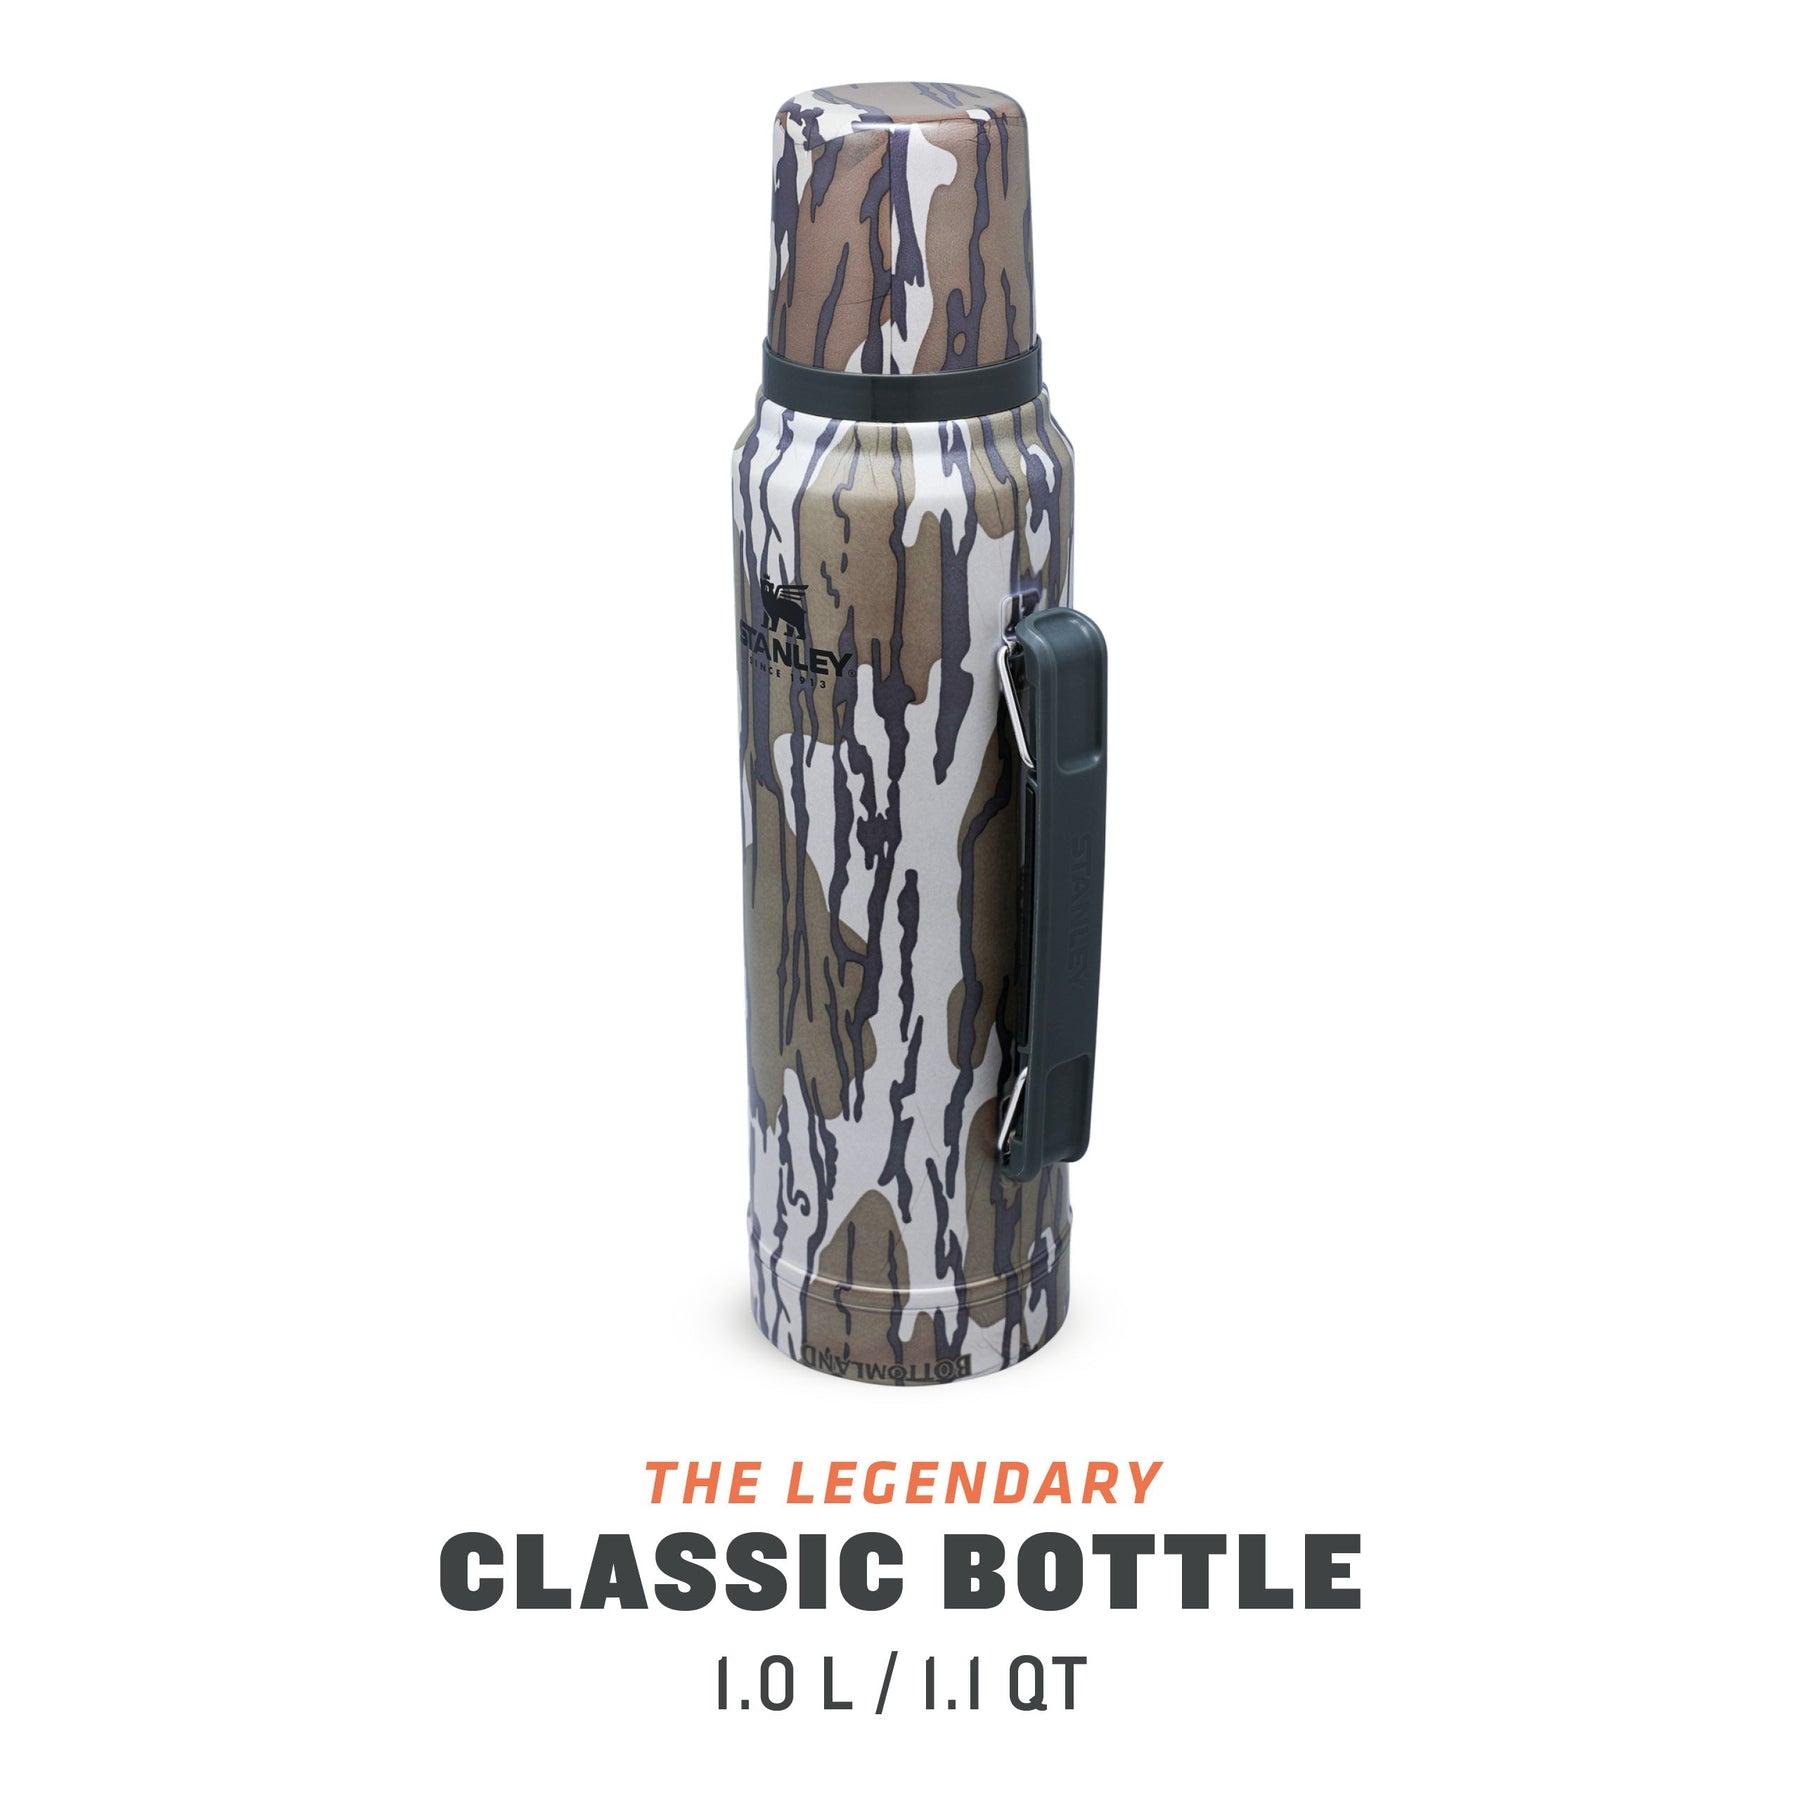 Stanley® Classic Bottle